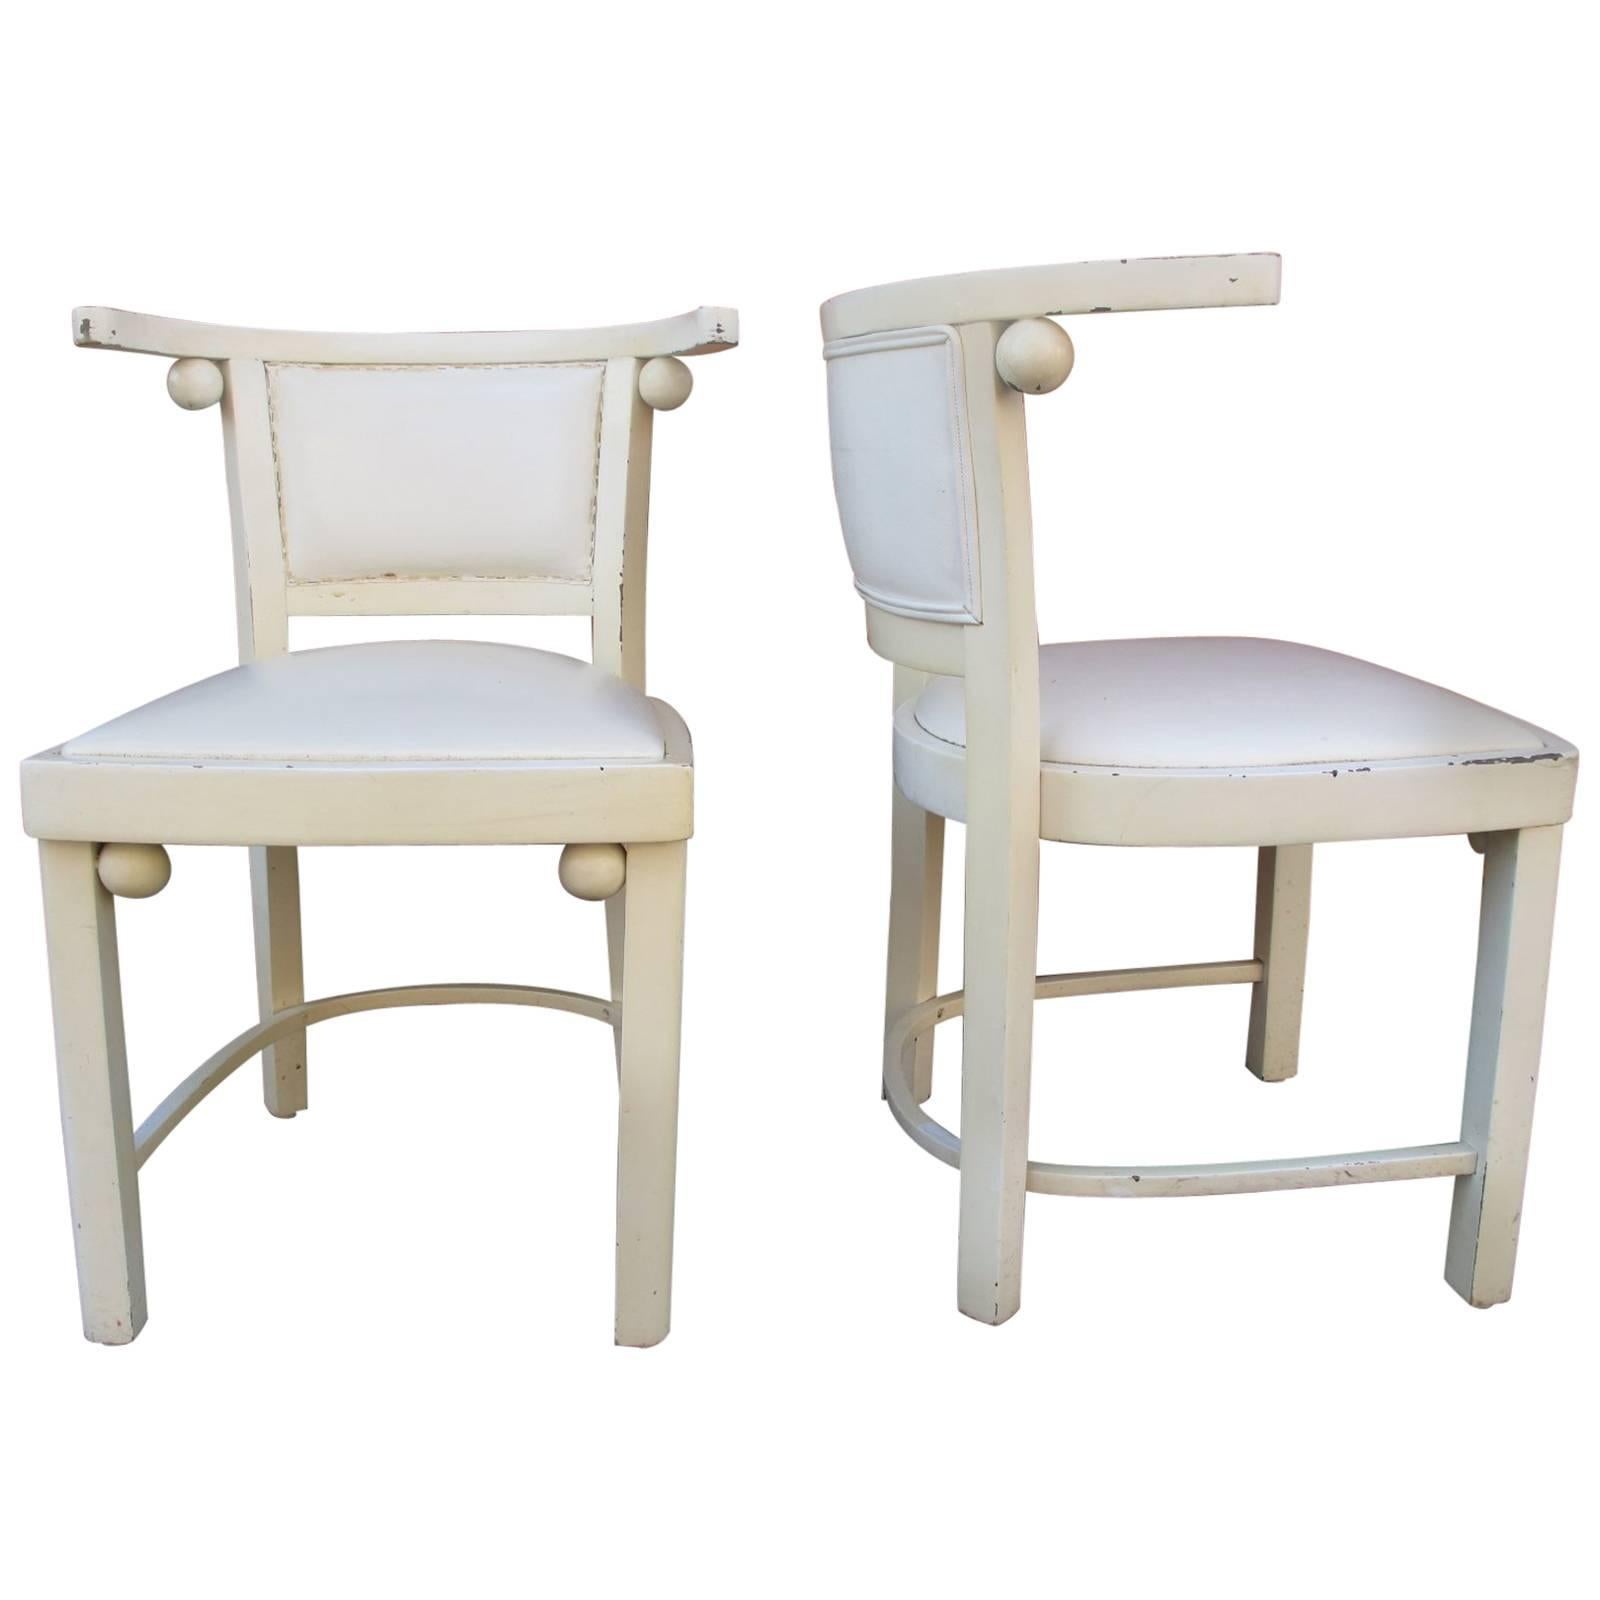 Pair of Chairs, Manner of Josef Hoffmann